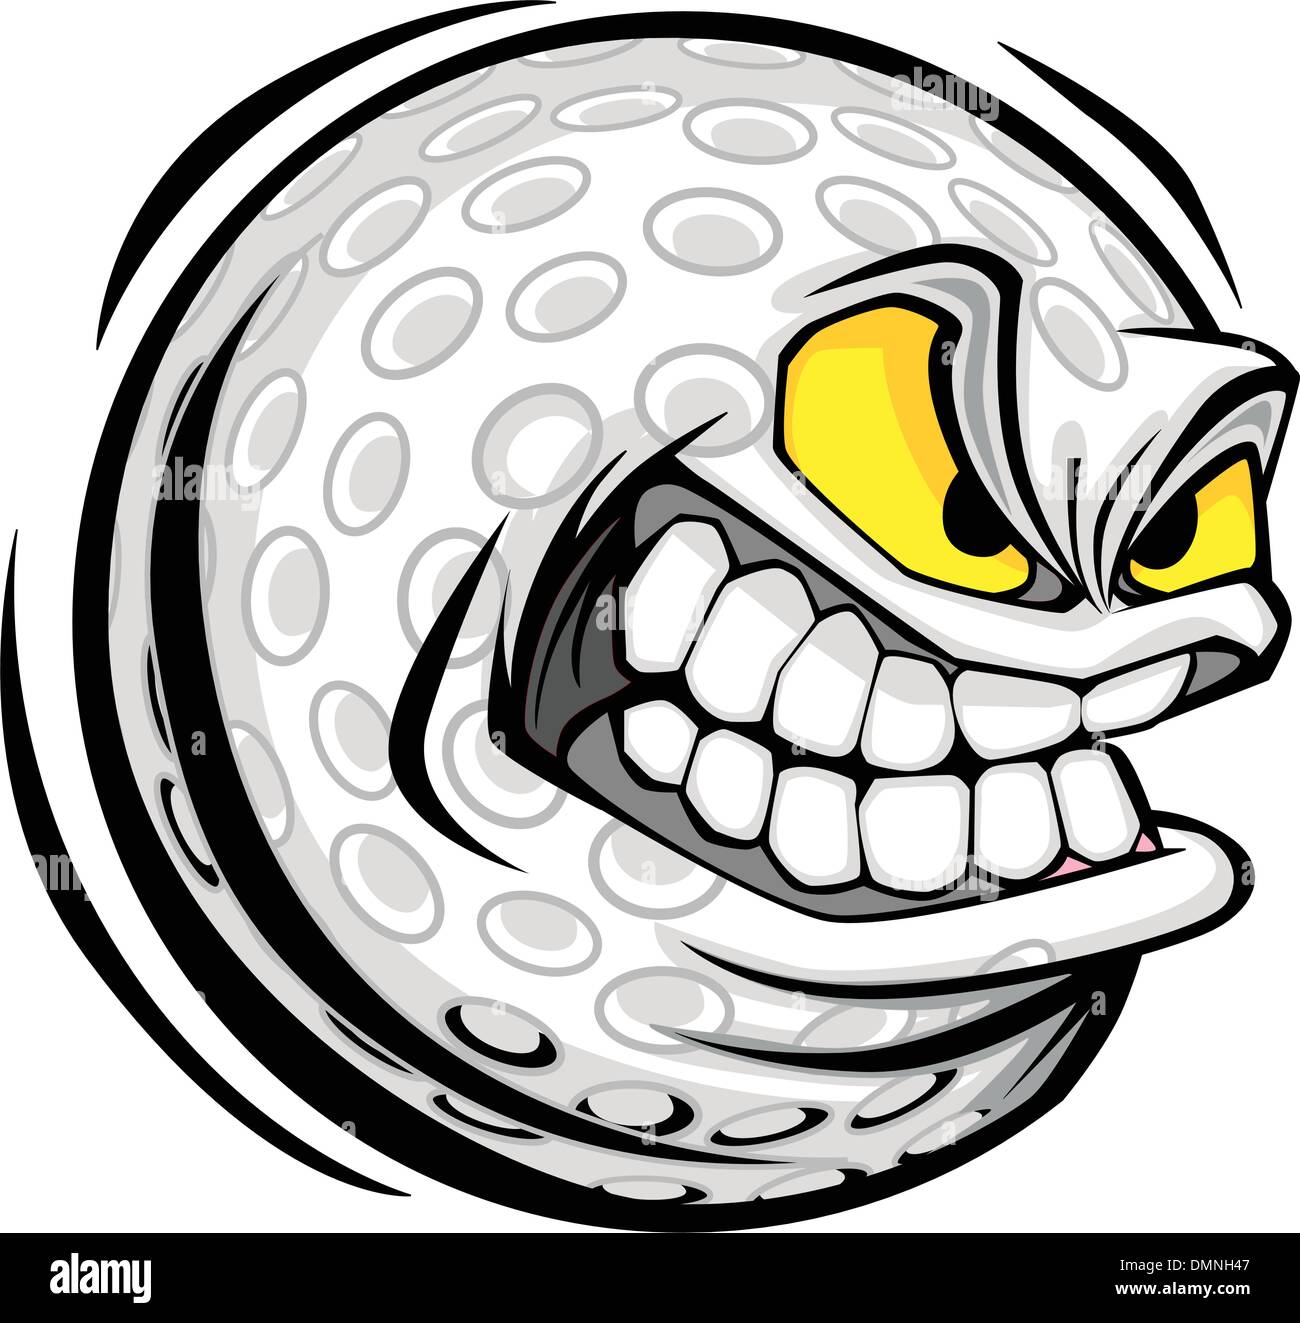 Golf-Ball-Gesicht-Cartoon-Vektor-Bild Stock Vektor